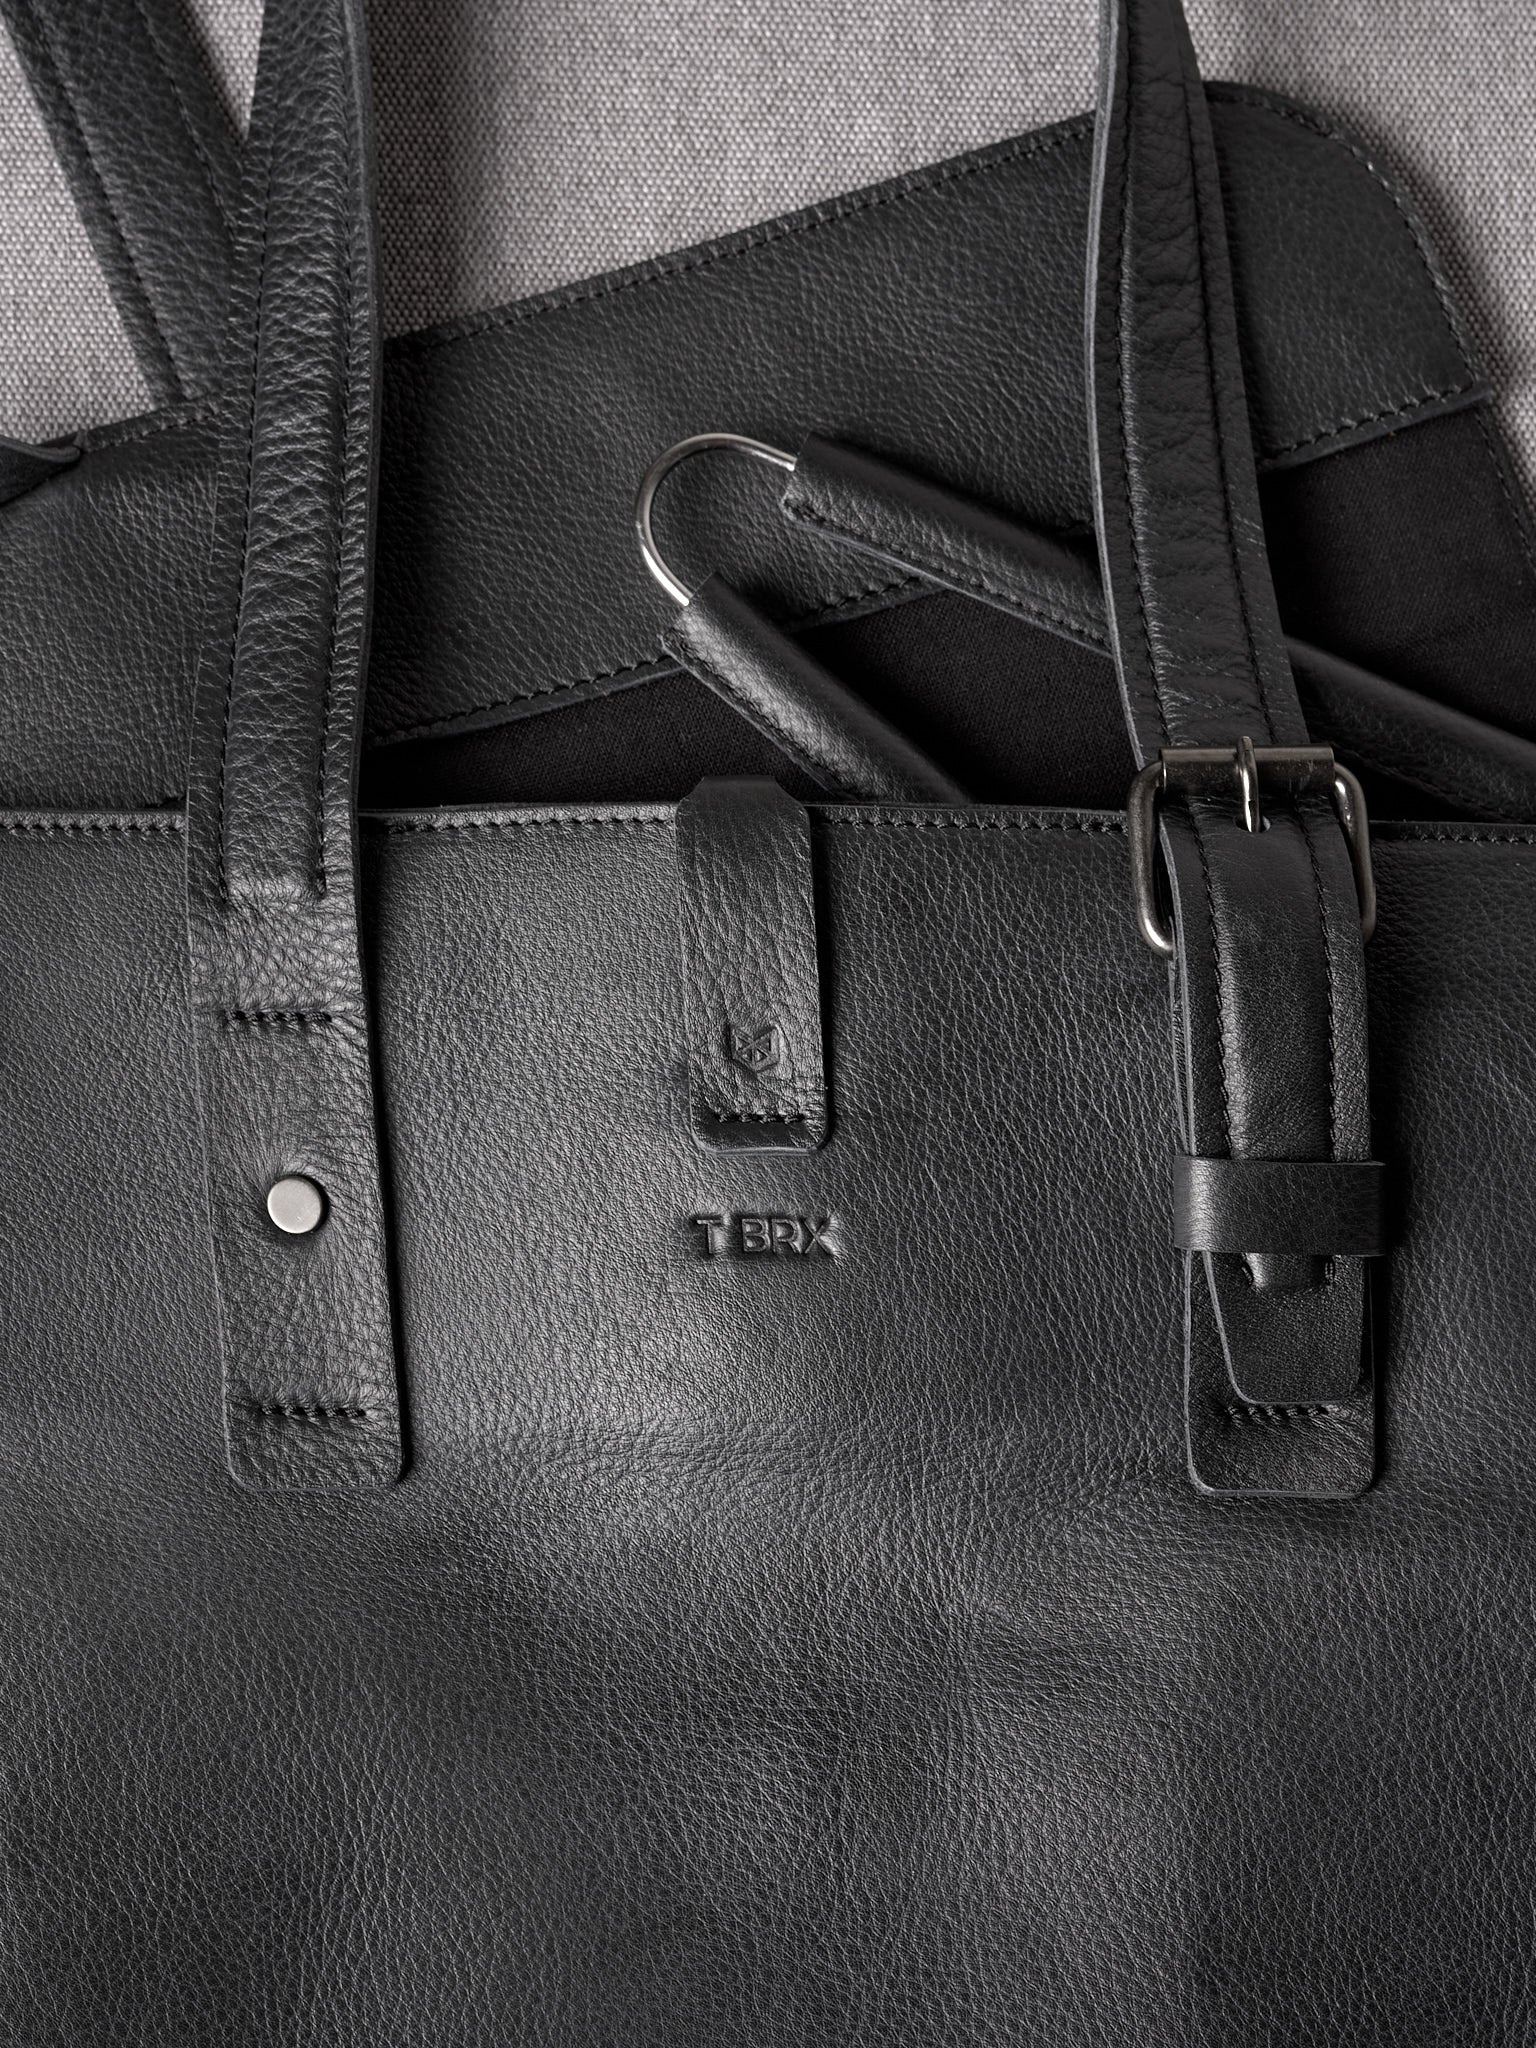 Custom Engraving. Travel Garment Bag Black by Capra Leather